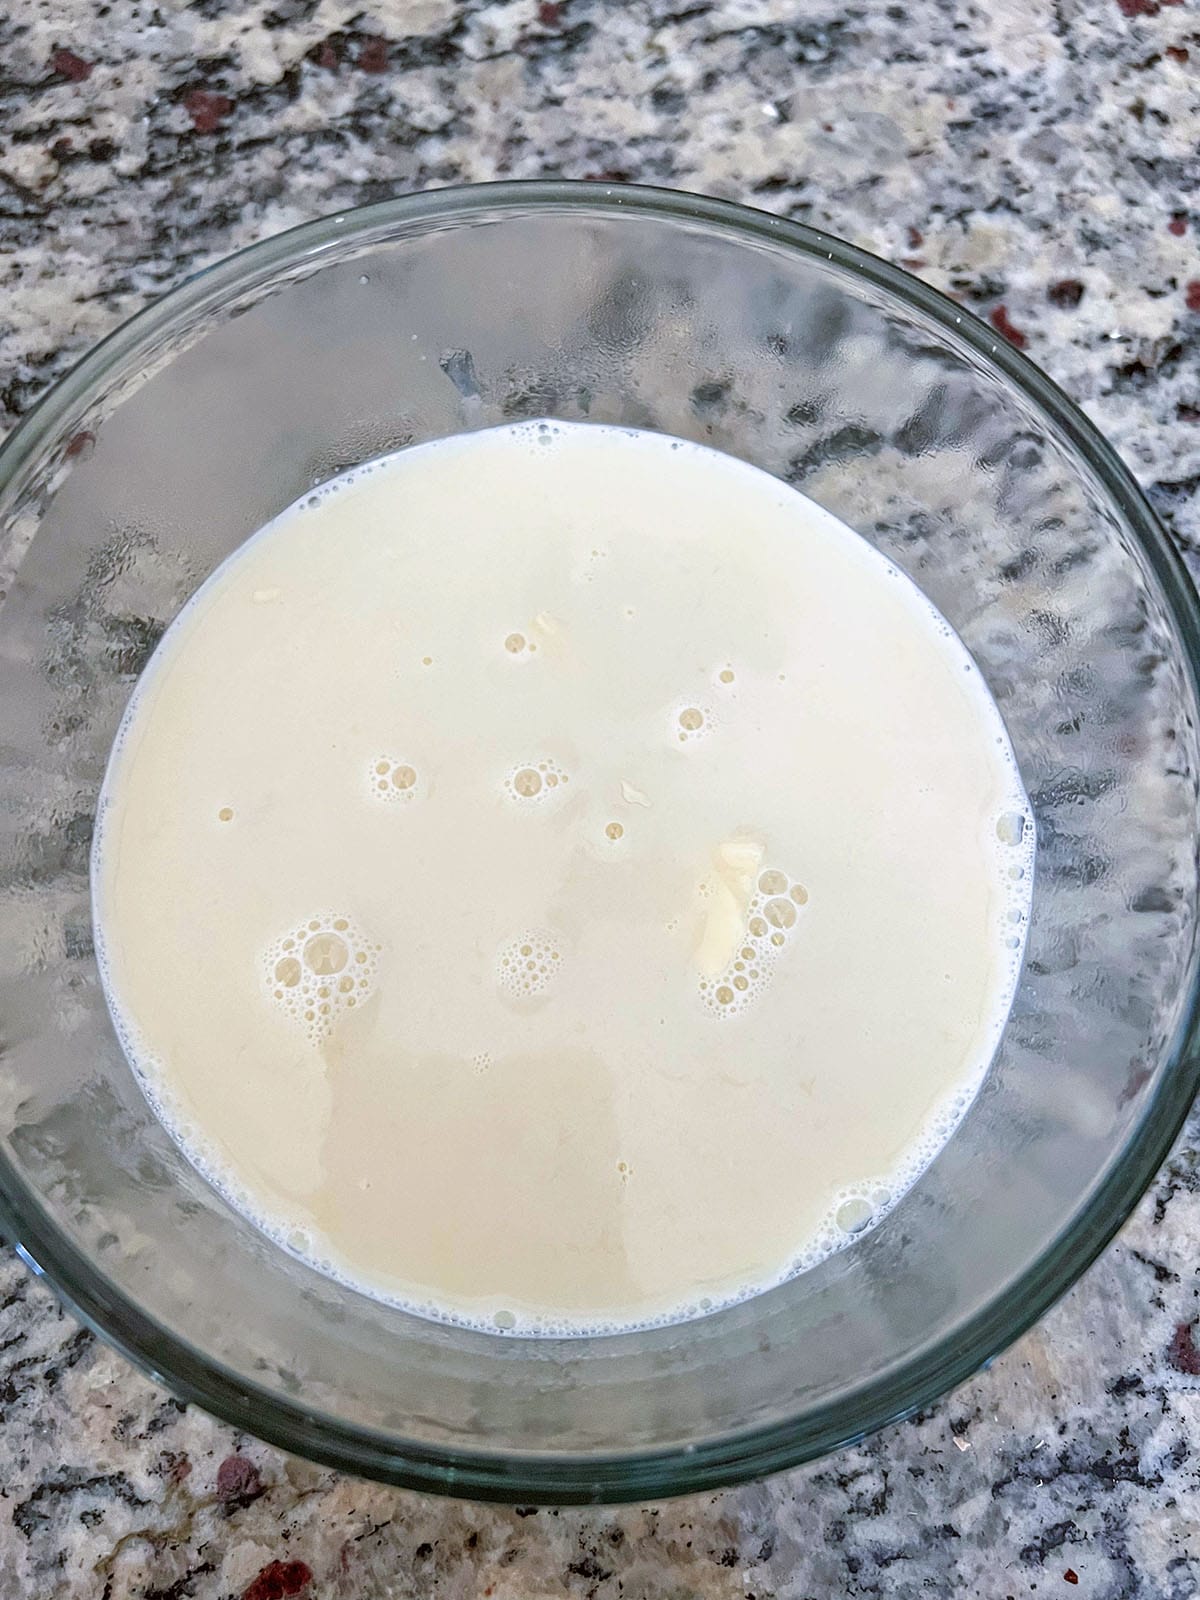 White chocolate mocha sauce in bowl.